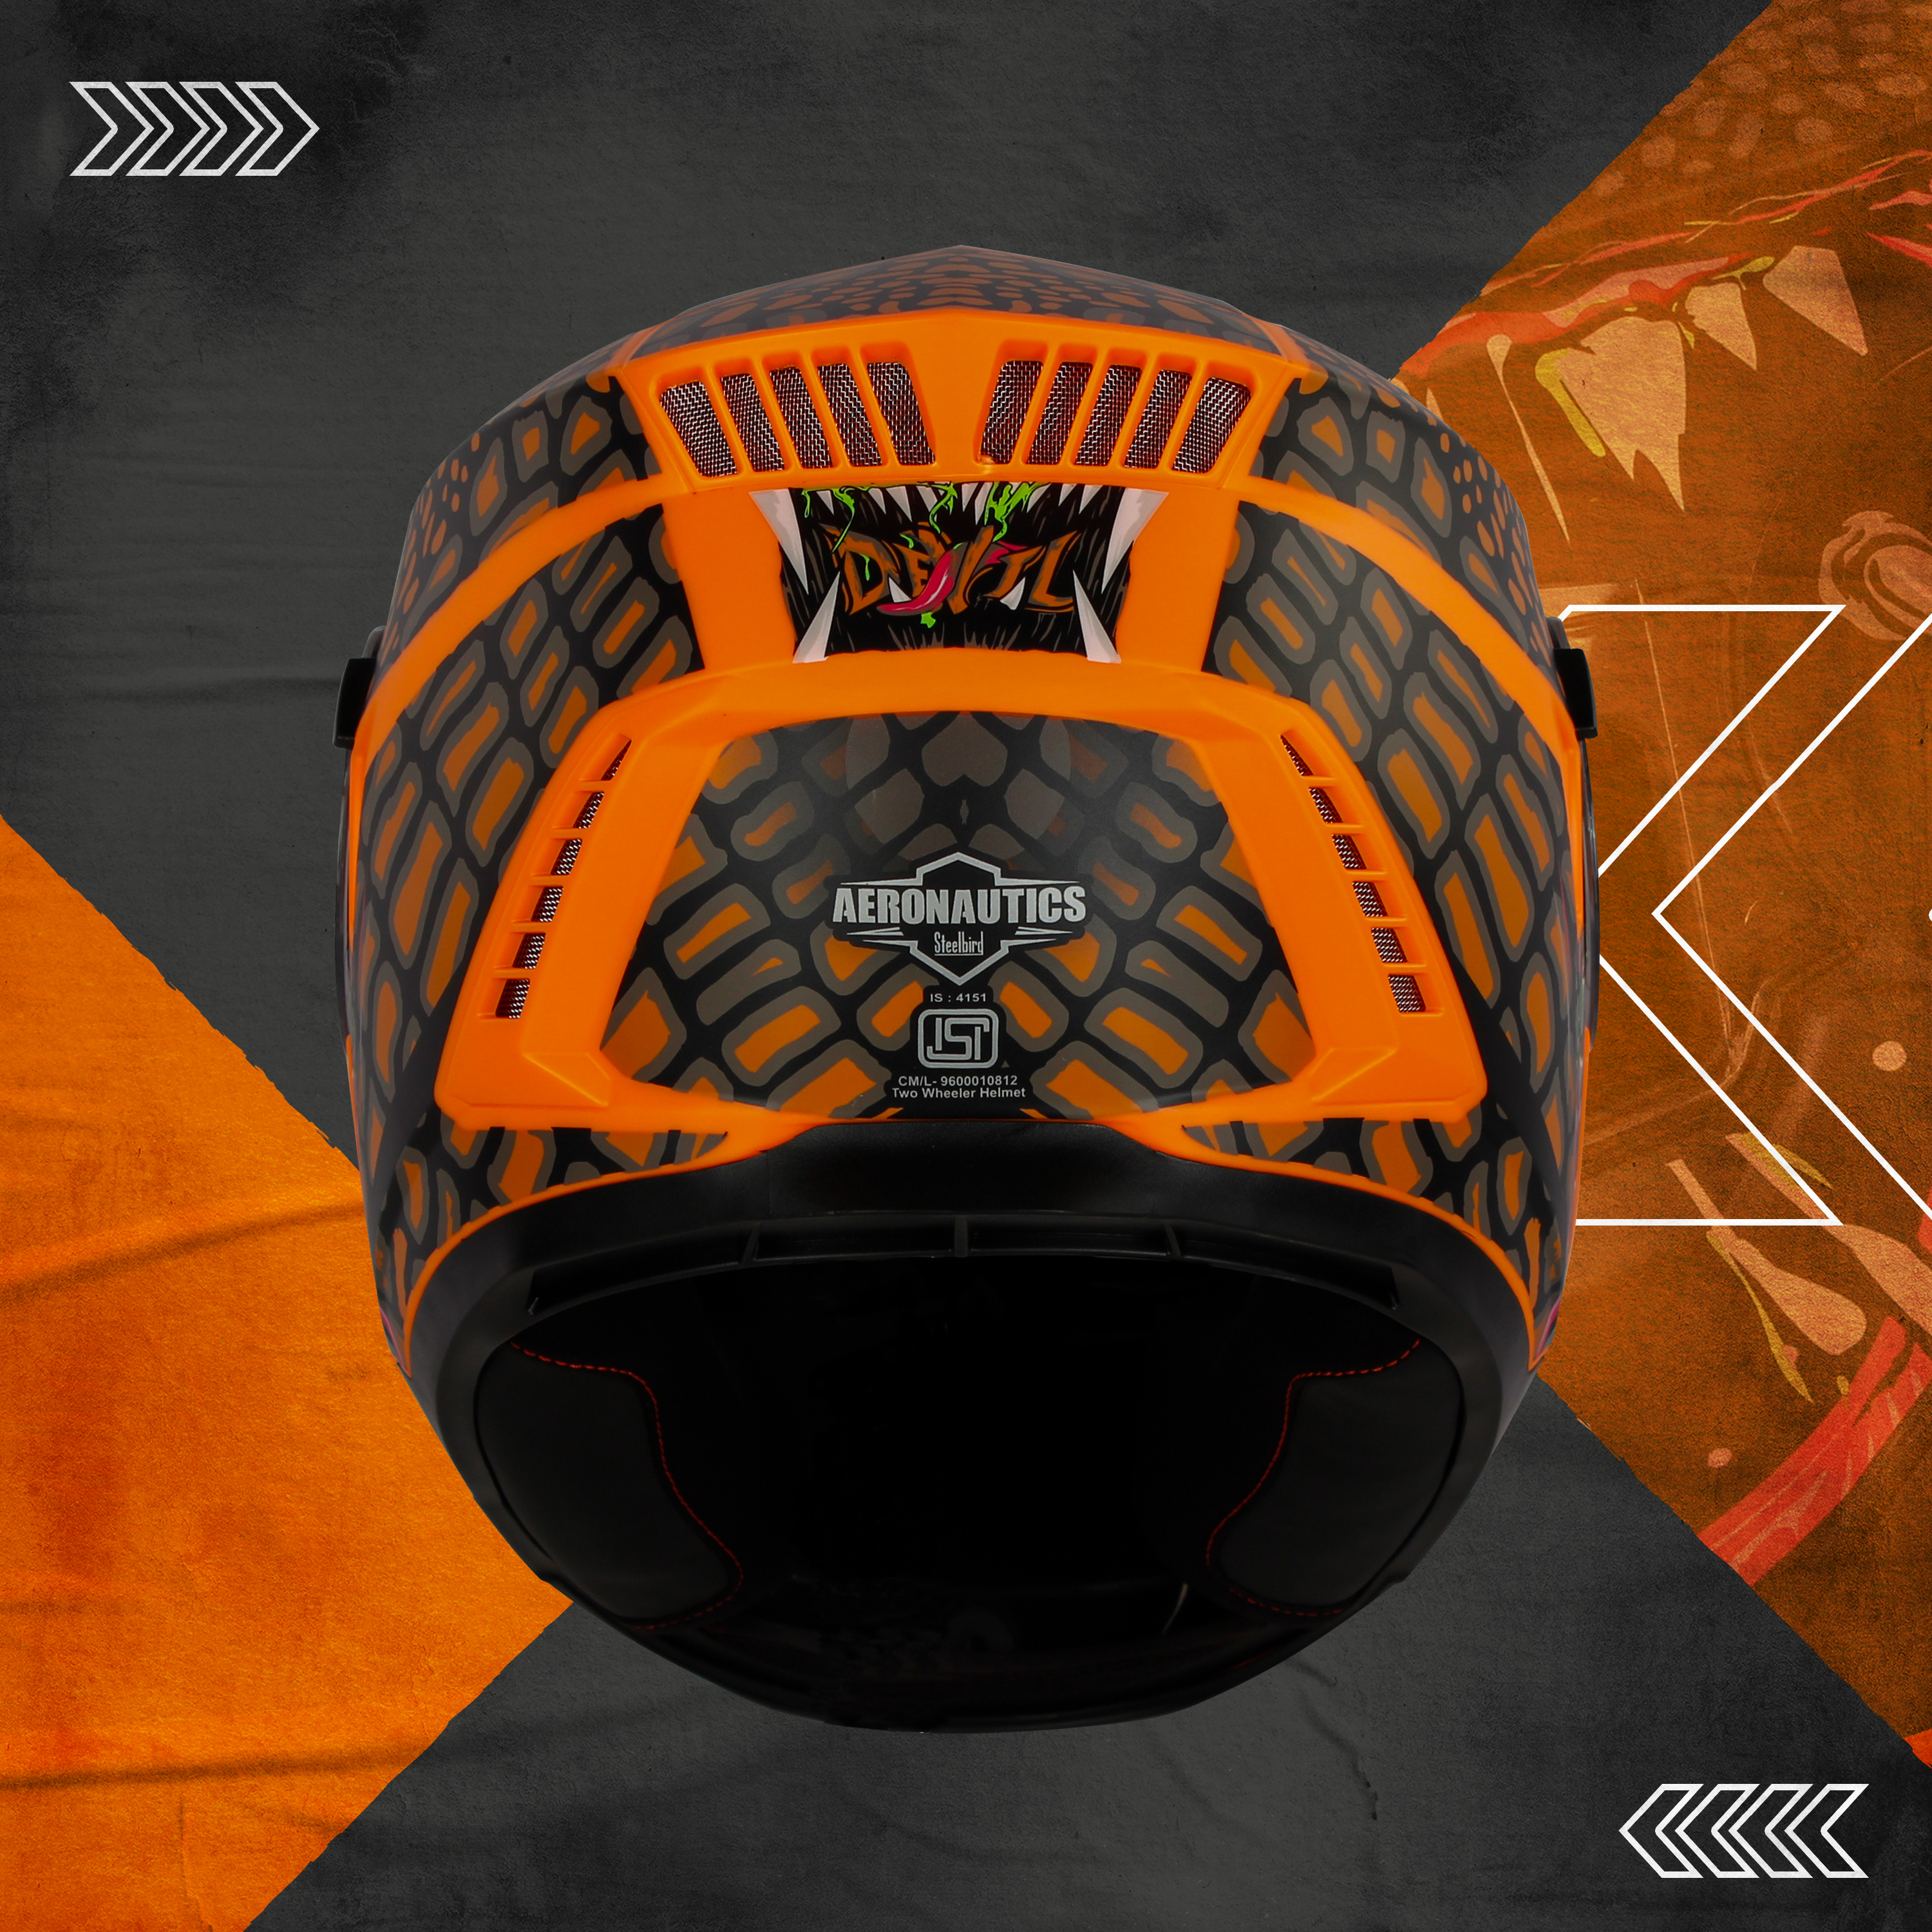 Steelbird SBH-40 Devil ISI Certified Full Face Helmet For Men And Women With Inner Smoke Sun Shield (Glossy Jazz Orange Orange)